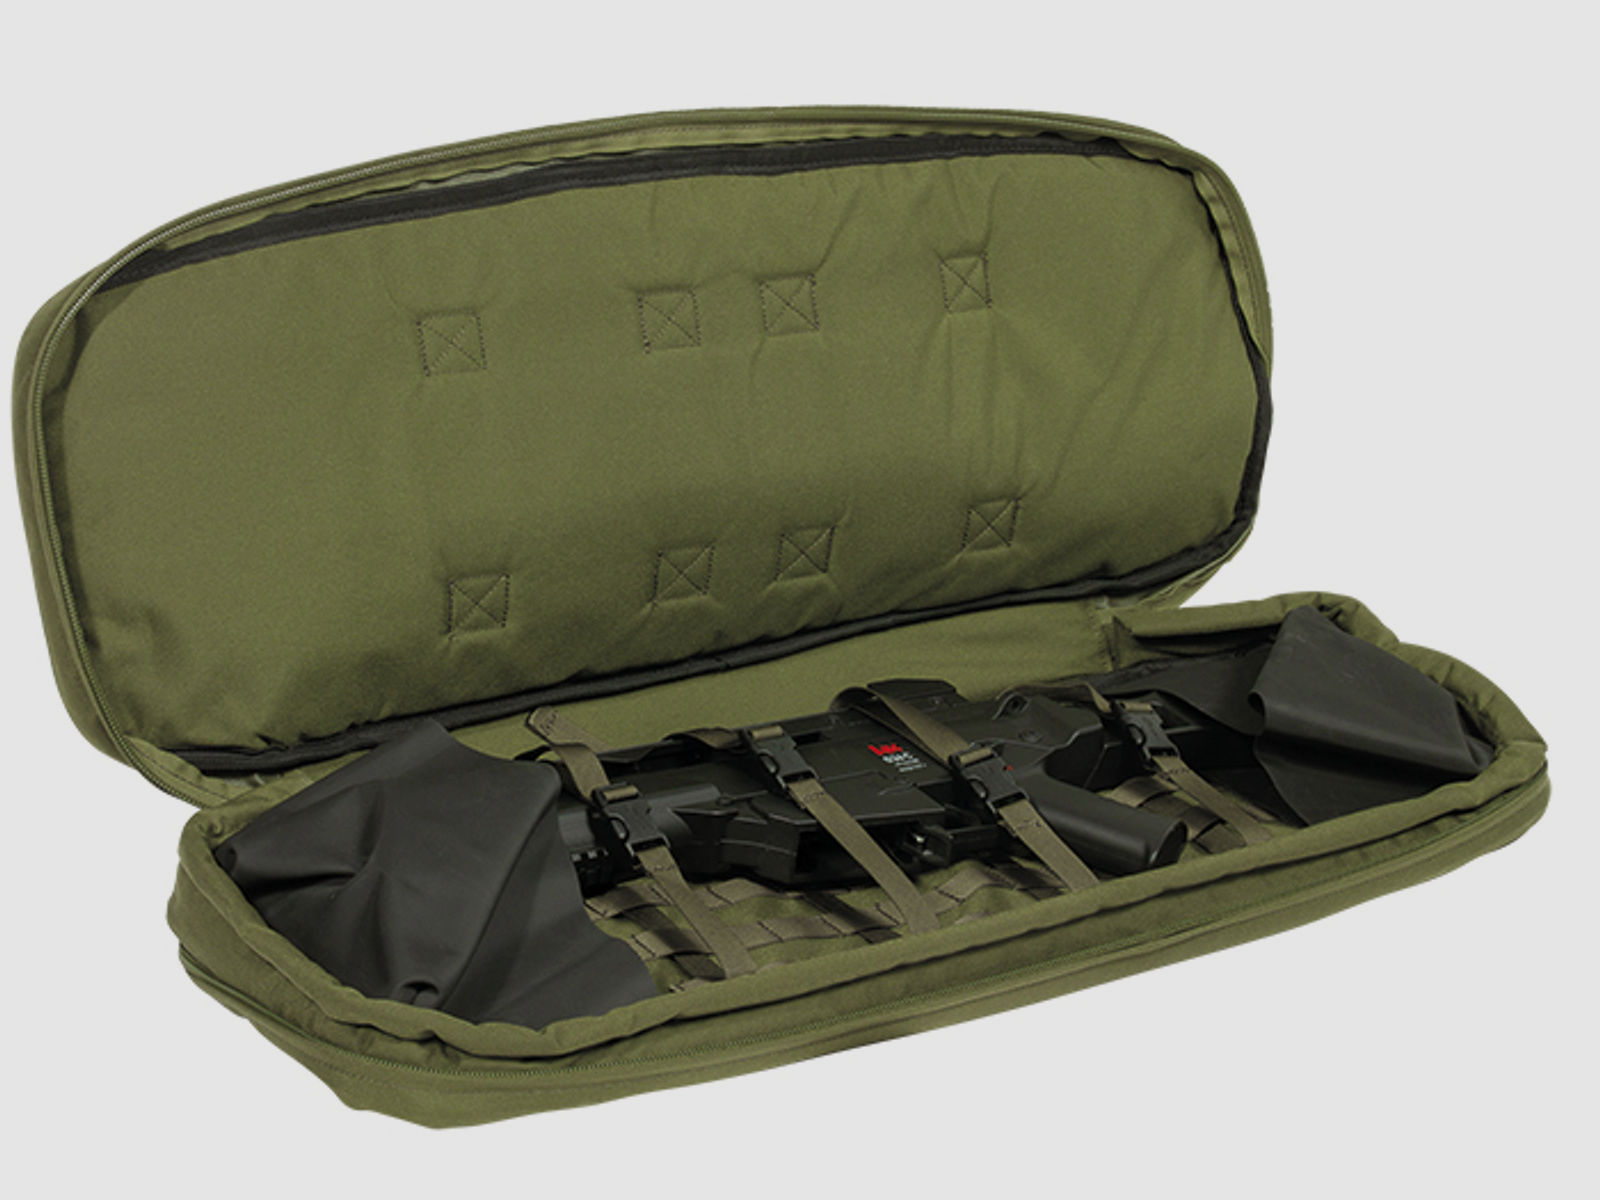 BERGHAUS FMPS Weapon Bag small / Waffentasche